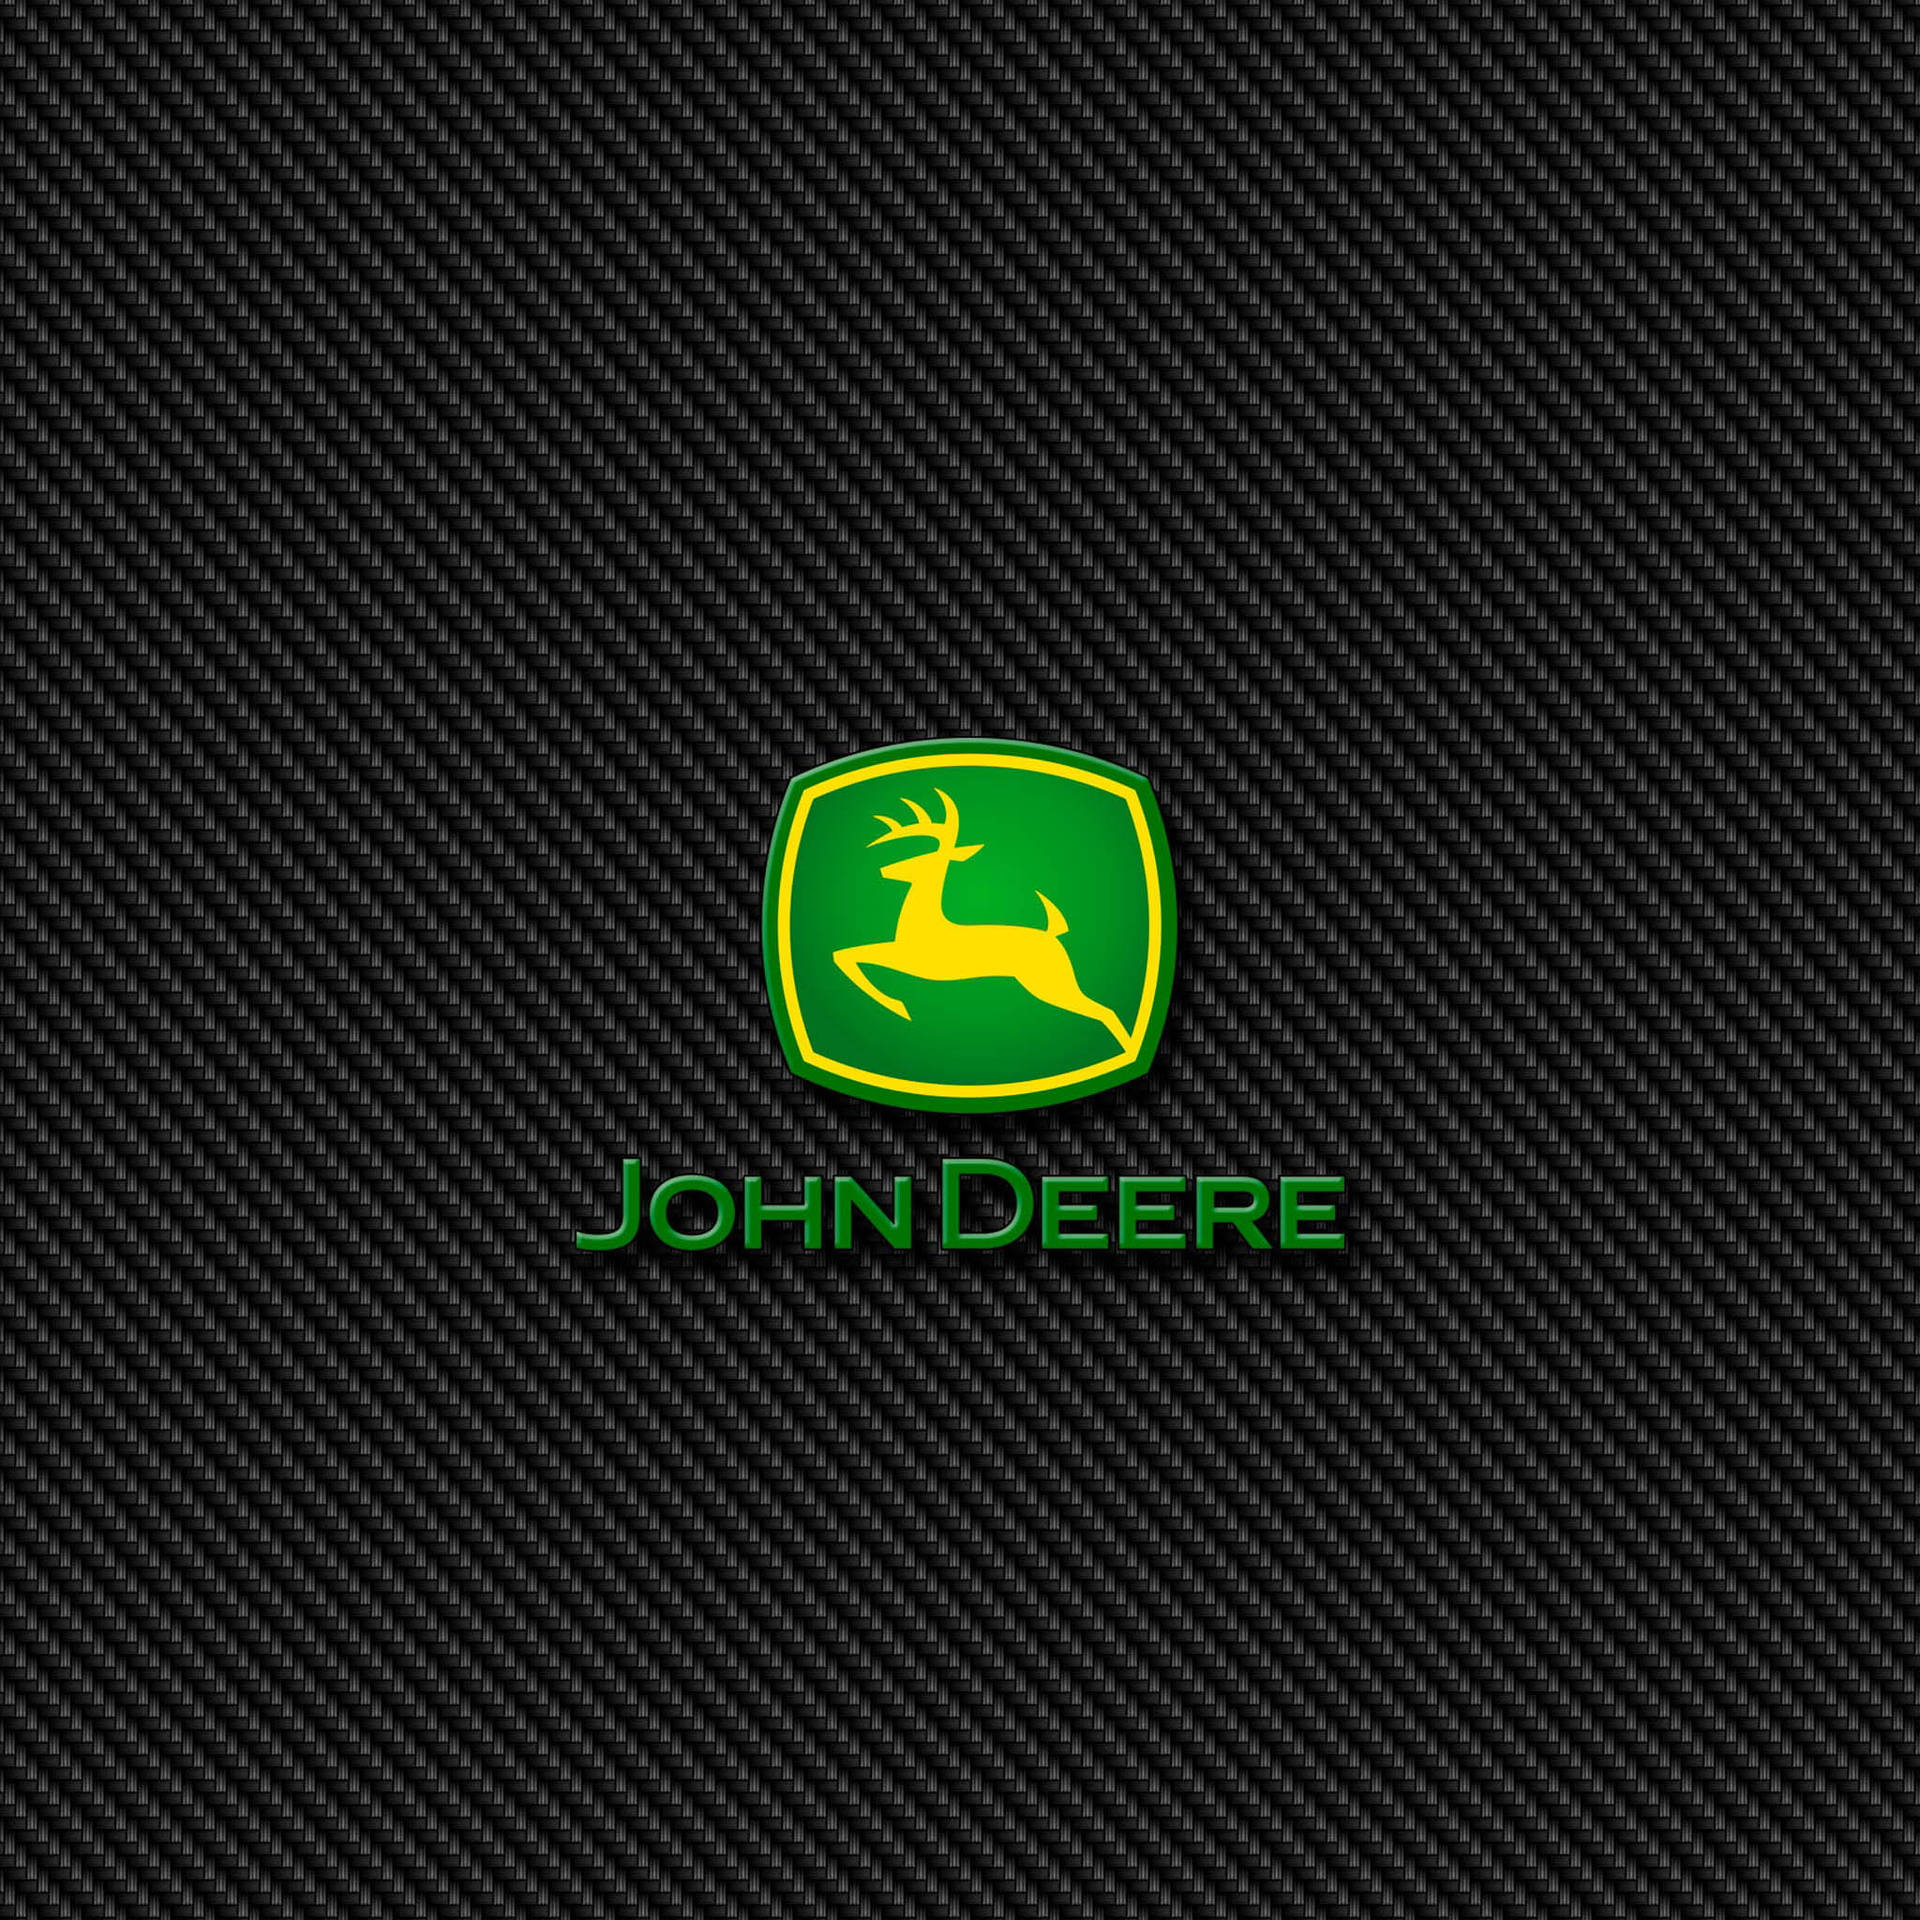 Textured John Deere Logo Wallpaper